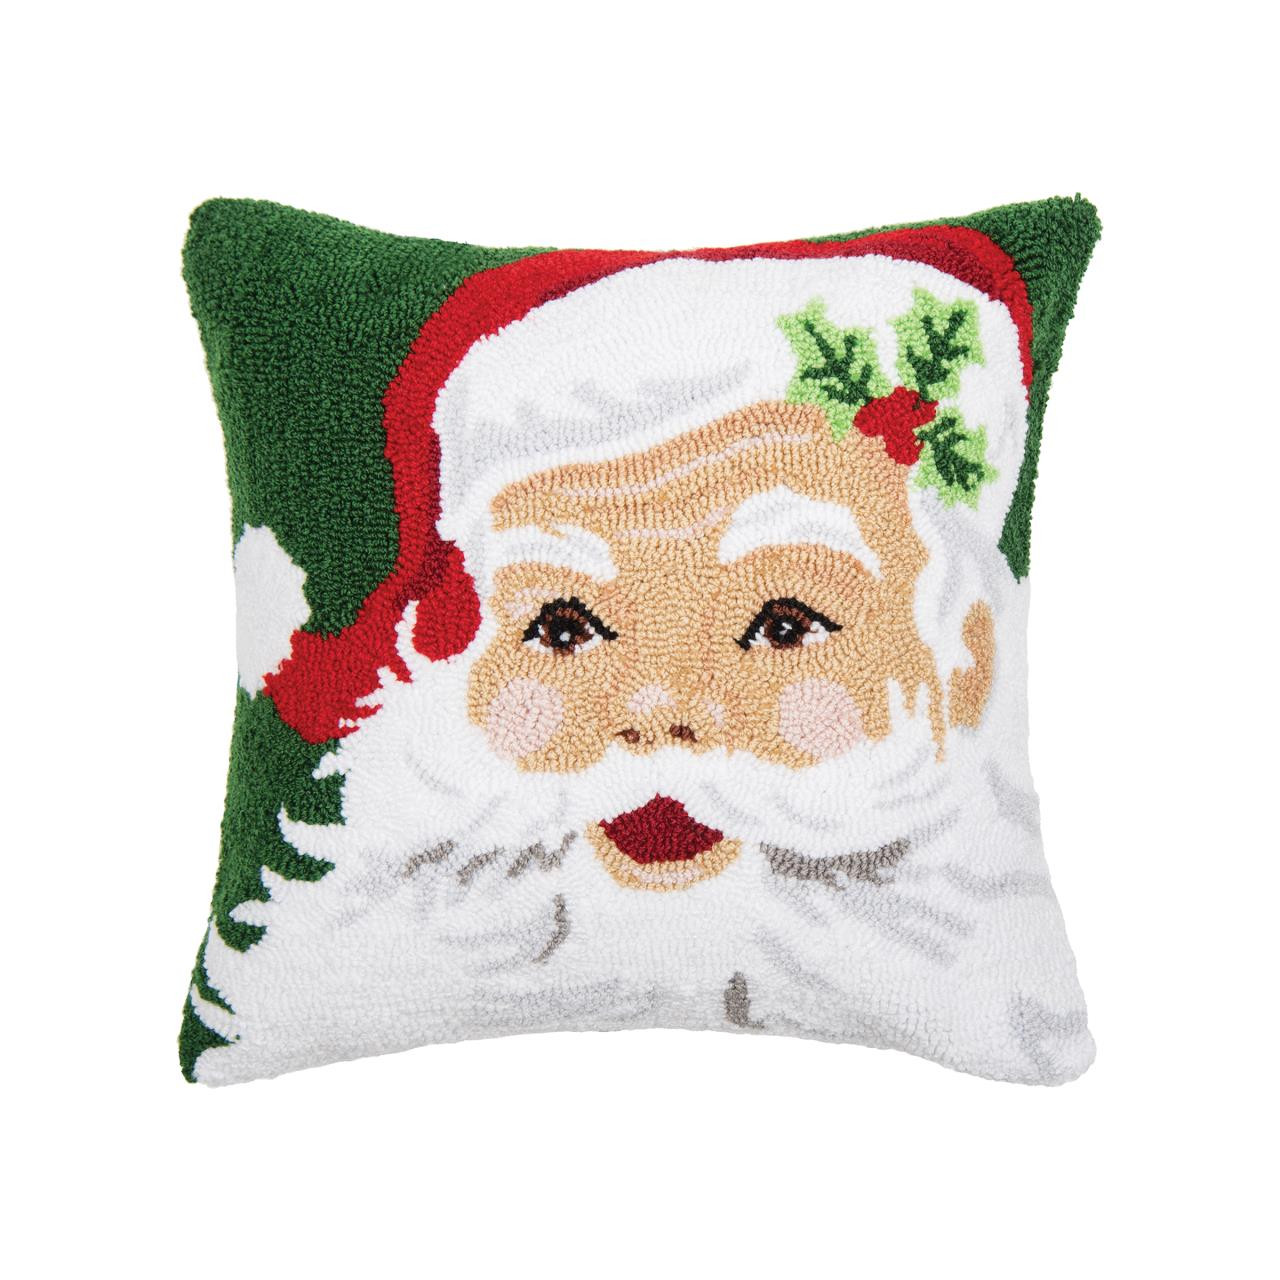 Santa Claus Pillow - 008246702498